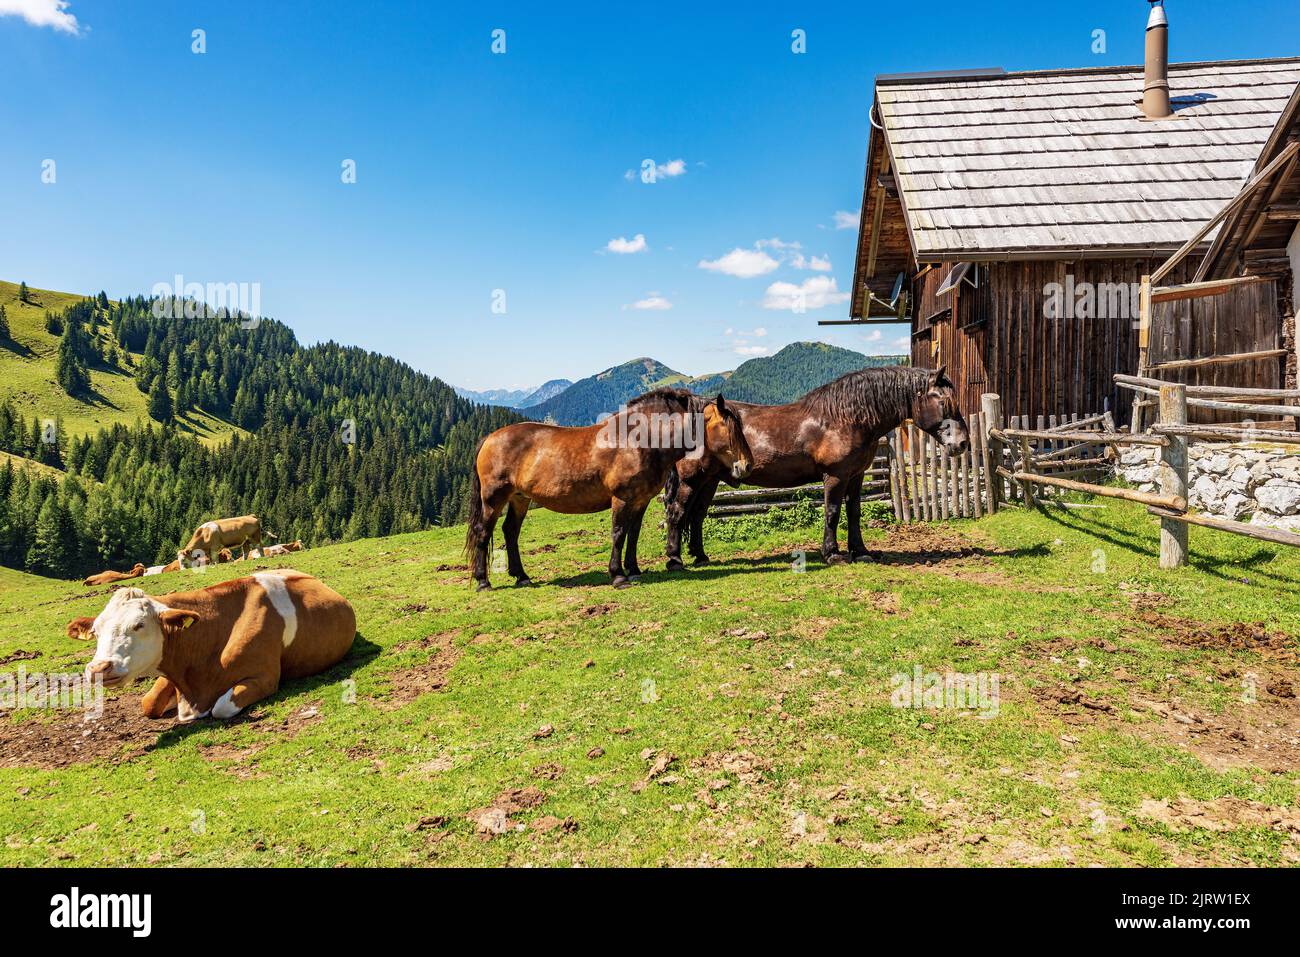 Herd of brown and white dairy cows and horses in a mountain pasture, Italy-Austria border, Feistritz an der Gail, Osternig peak, Carinthia, Austria Stock Photo